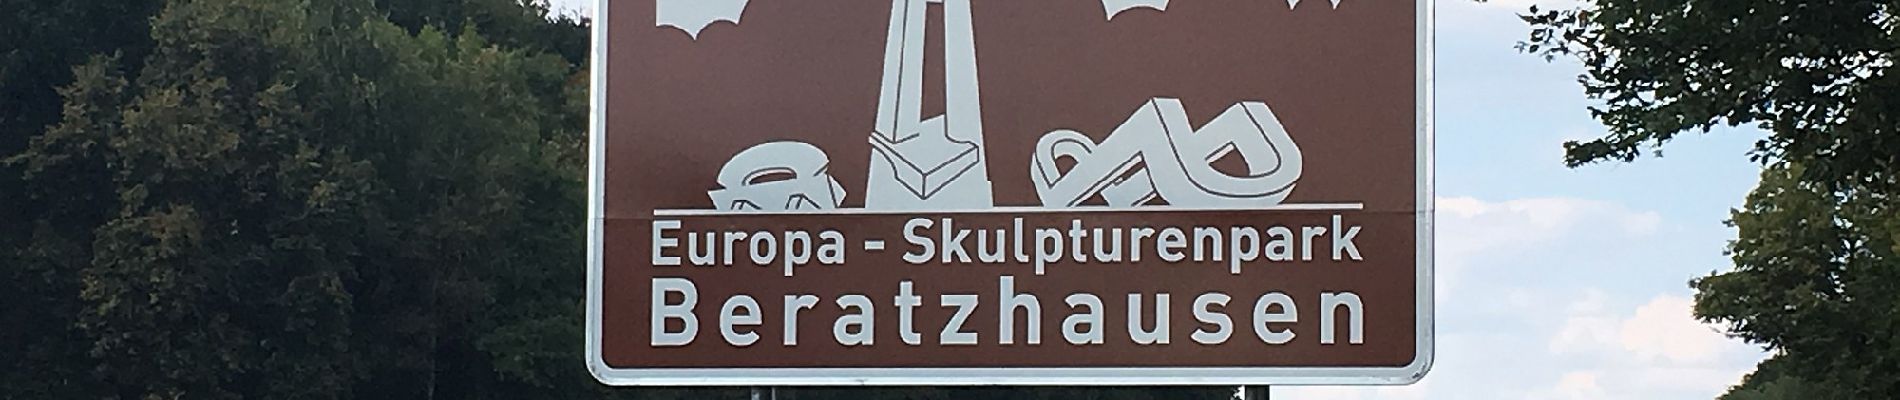 Tour Zu Fuß Beratzhausen - W 69 Kallmünz - Beratzhausen (Rotes Dreieck) - Photo